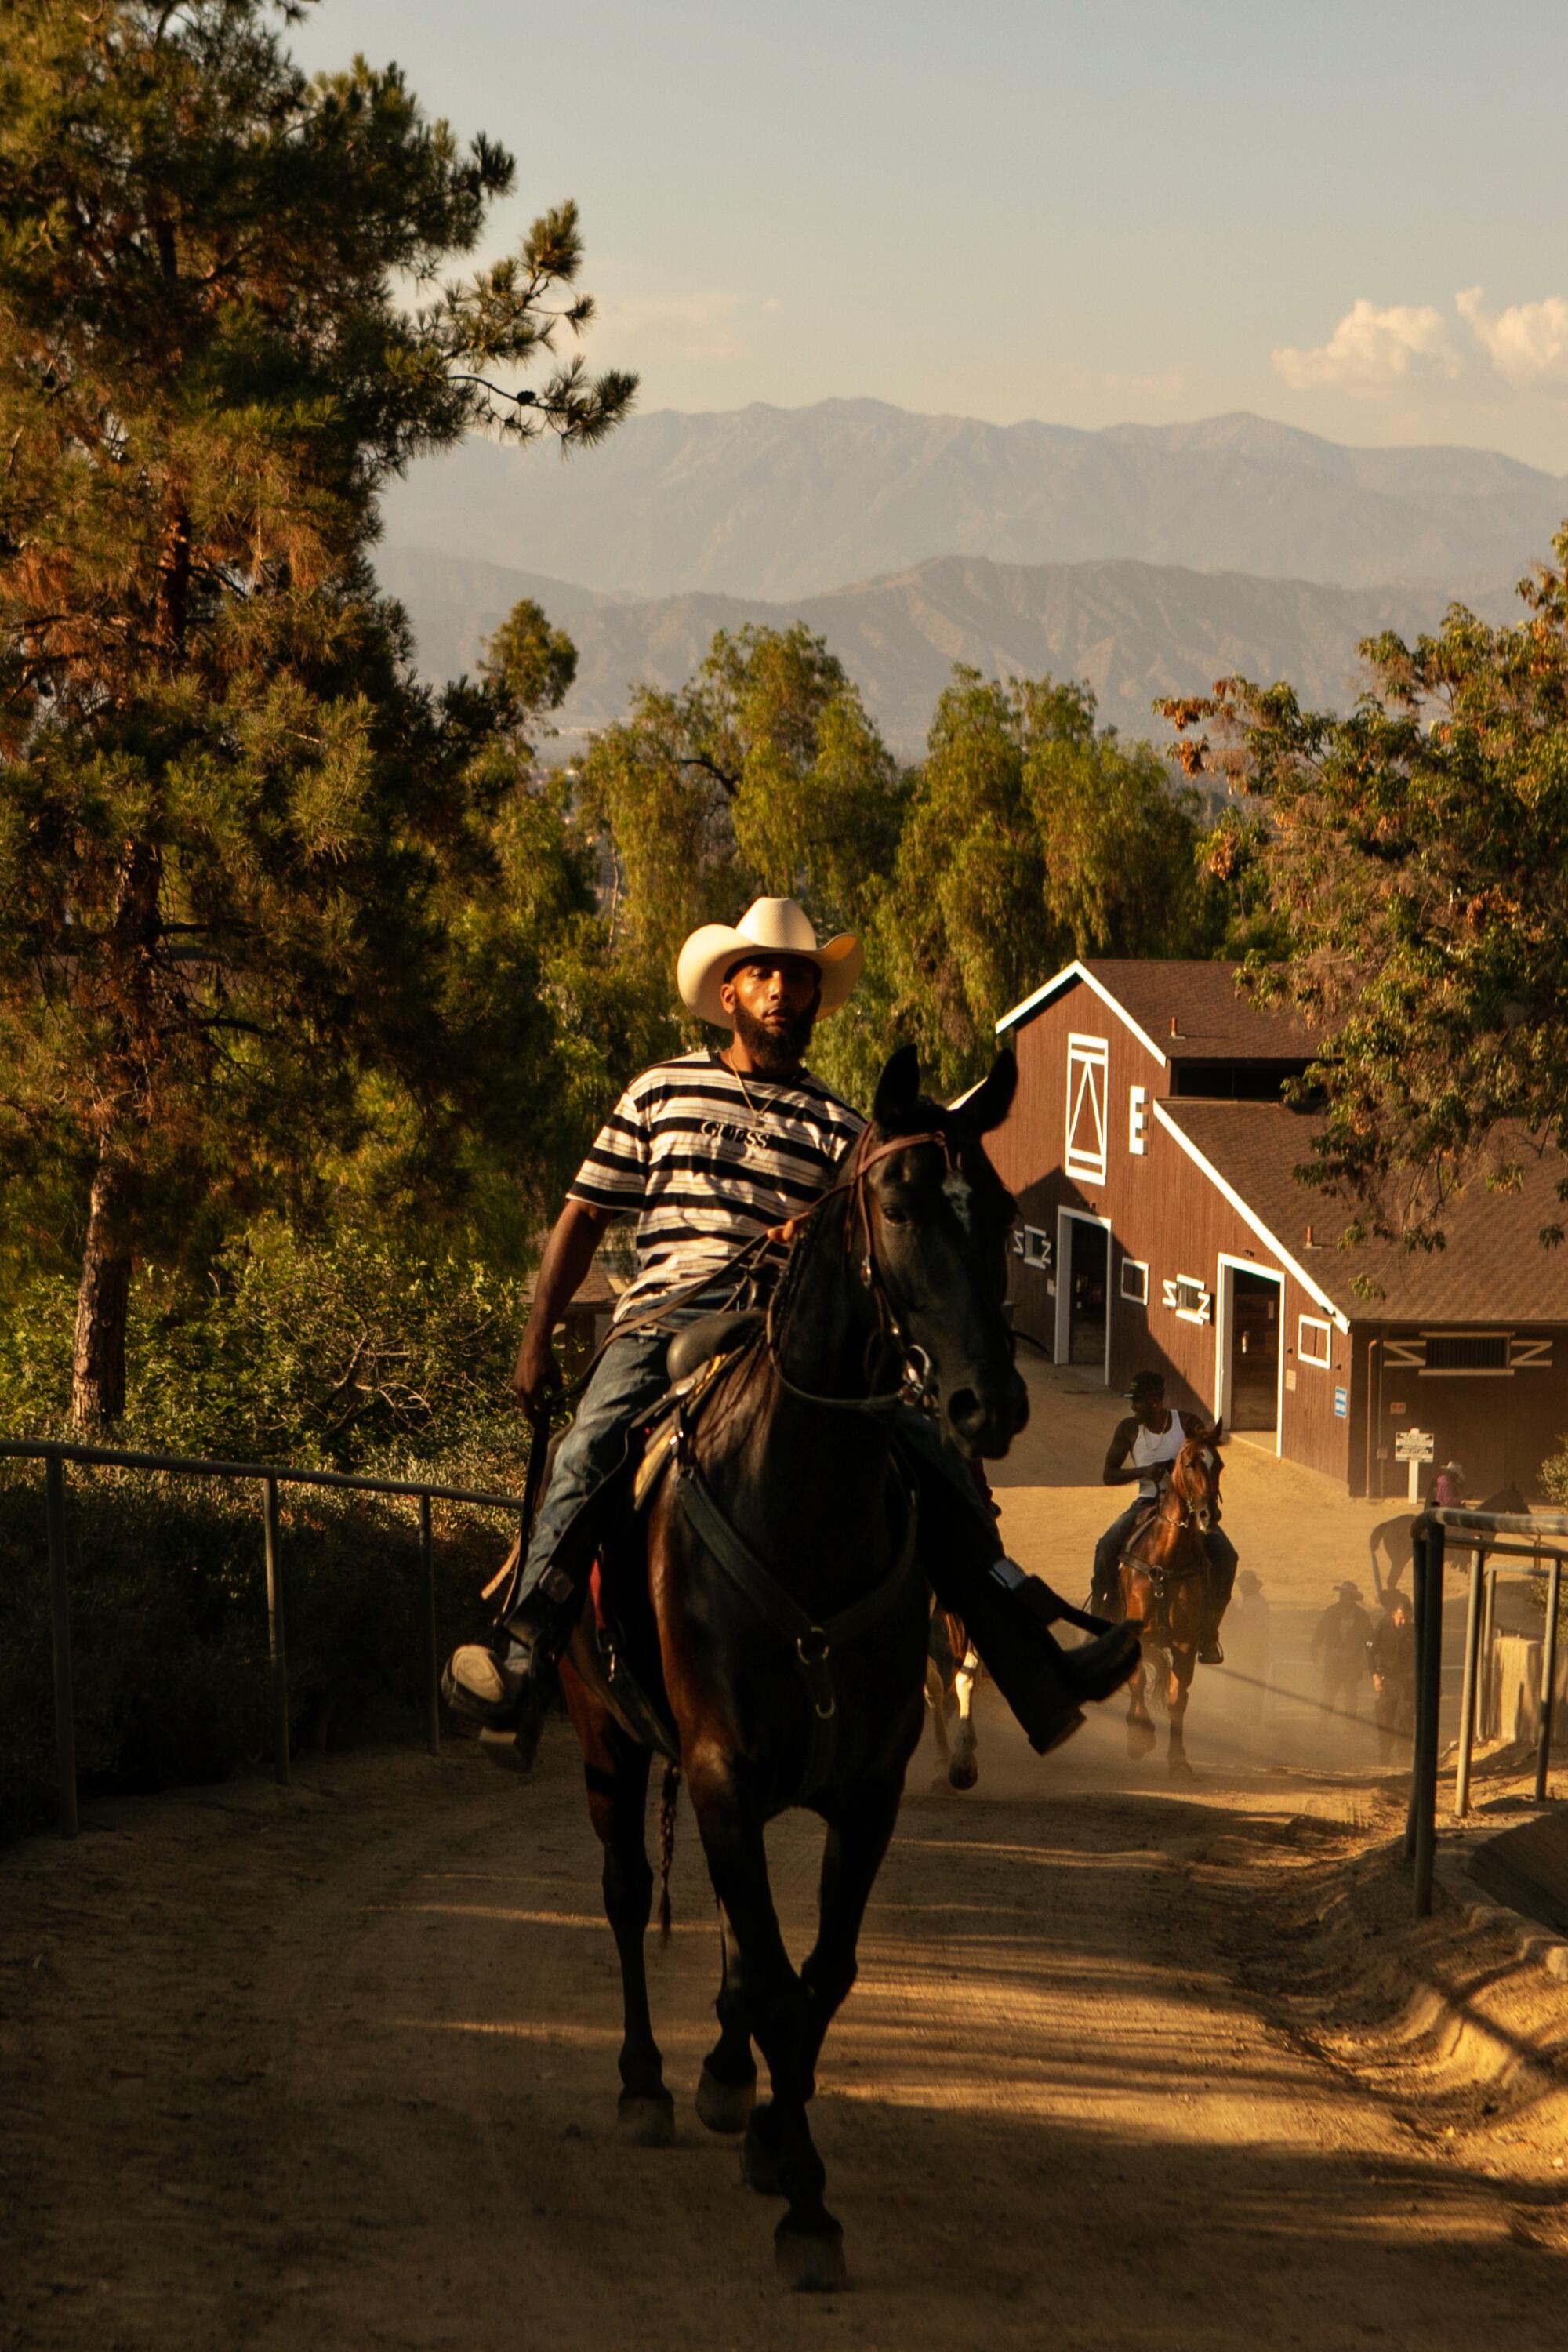 California's Black cowboys, equestrians go West their own way